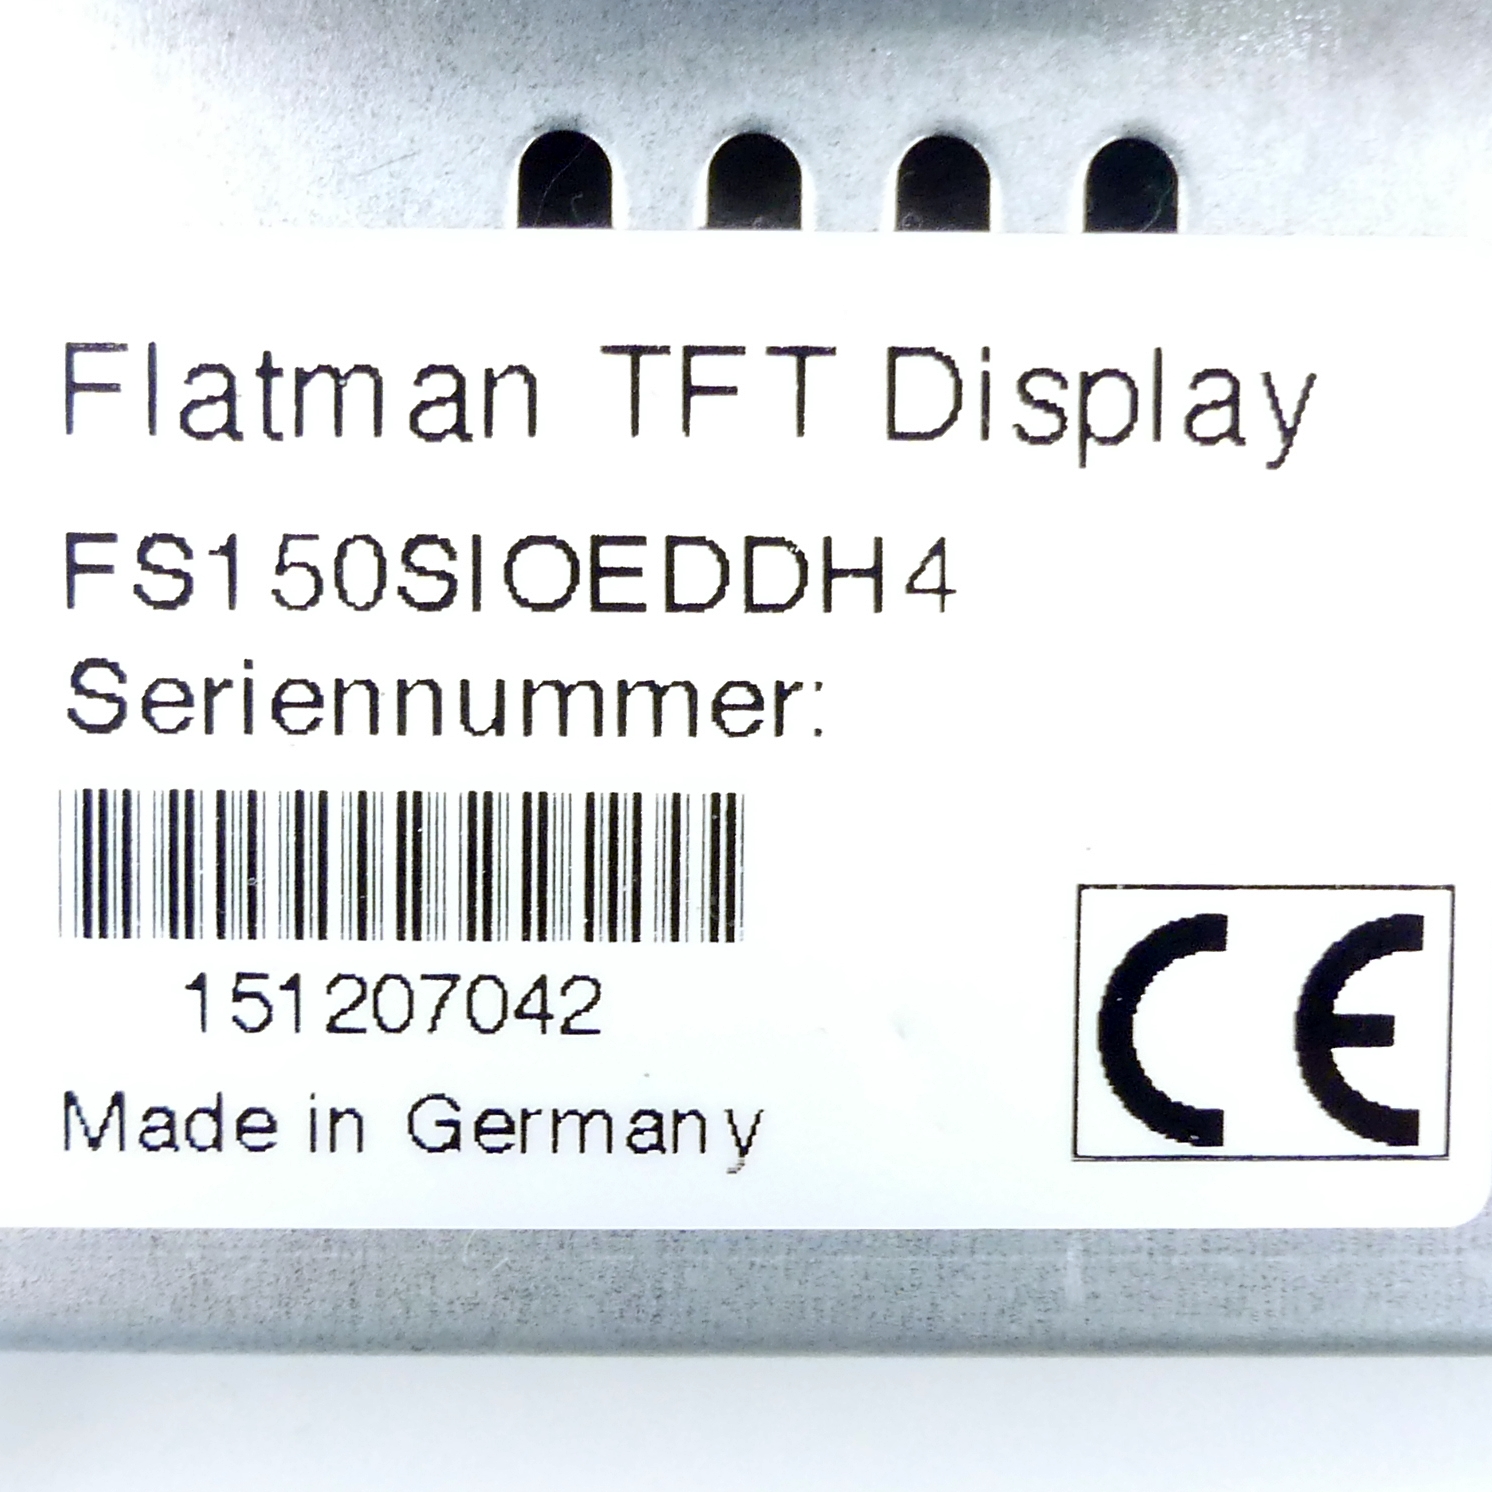 Industriemonitor Flatman 